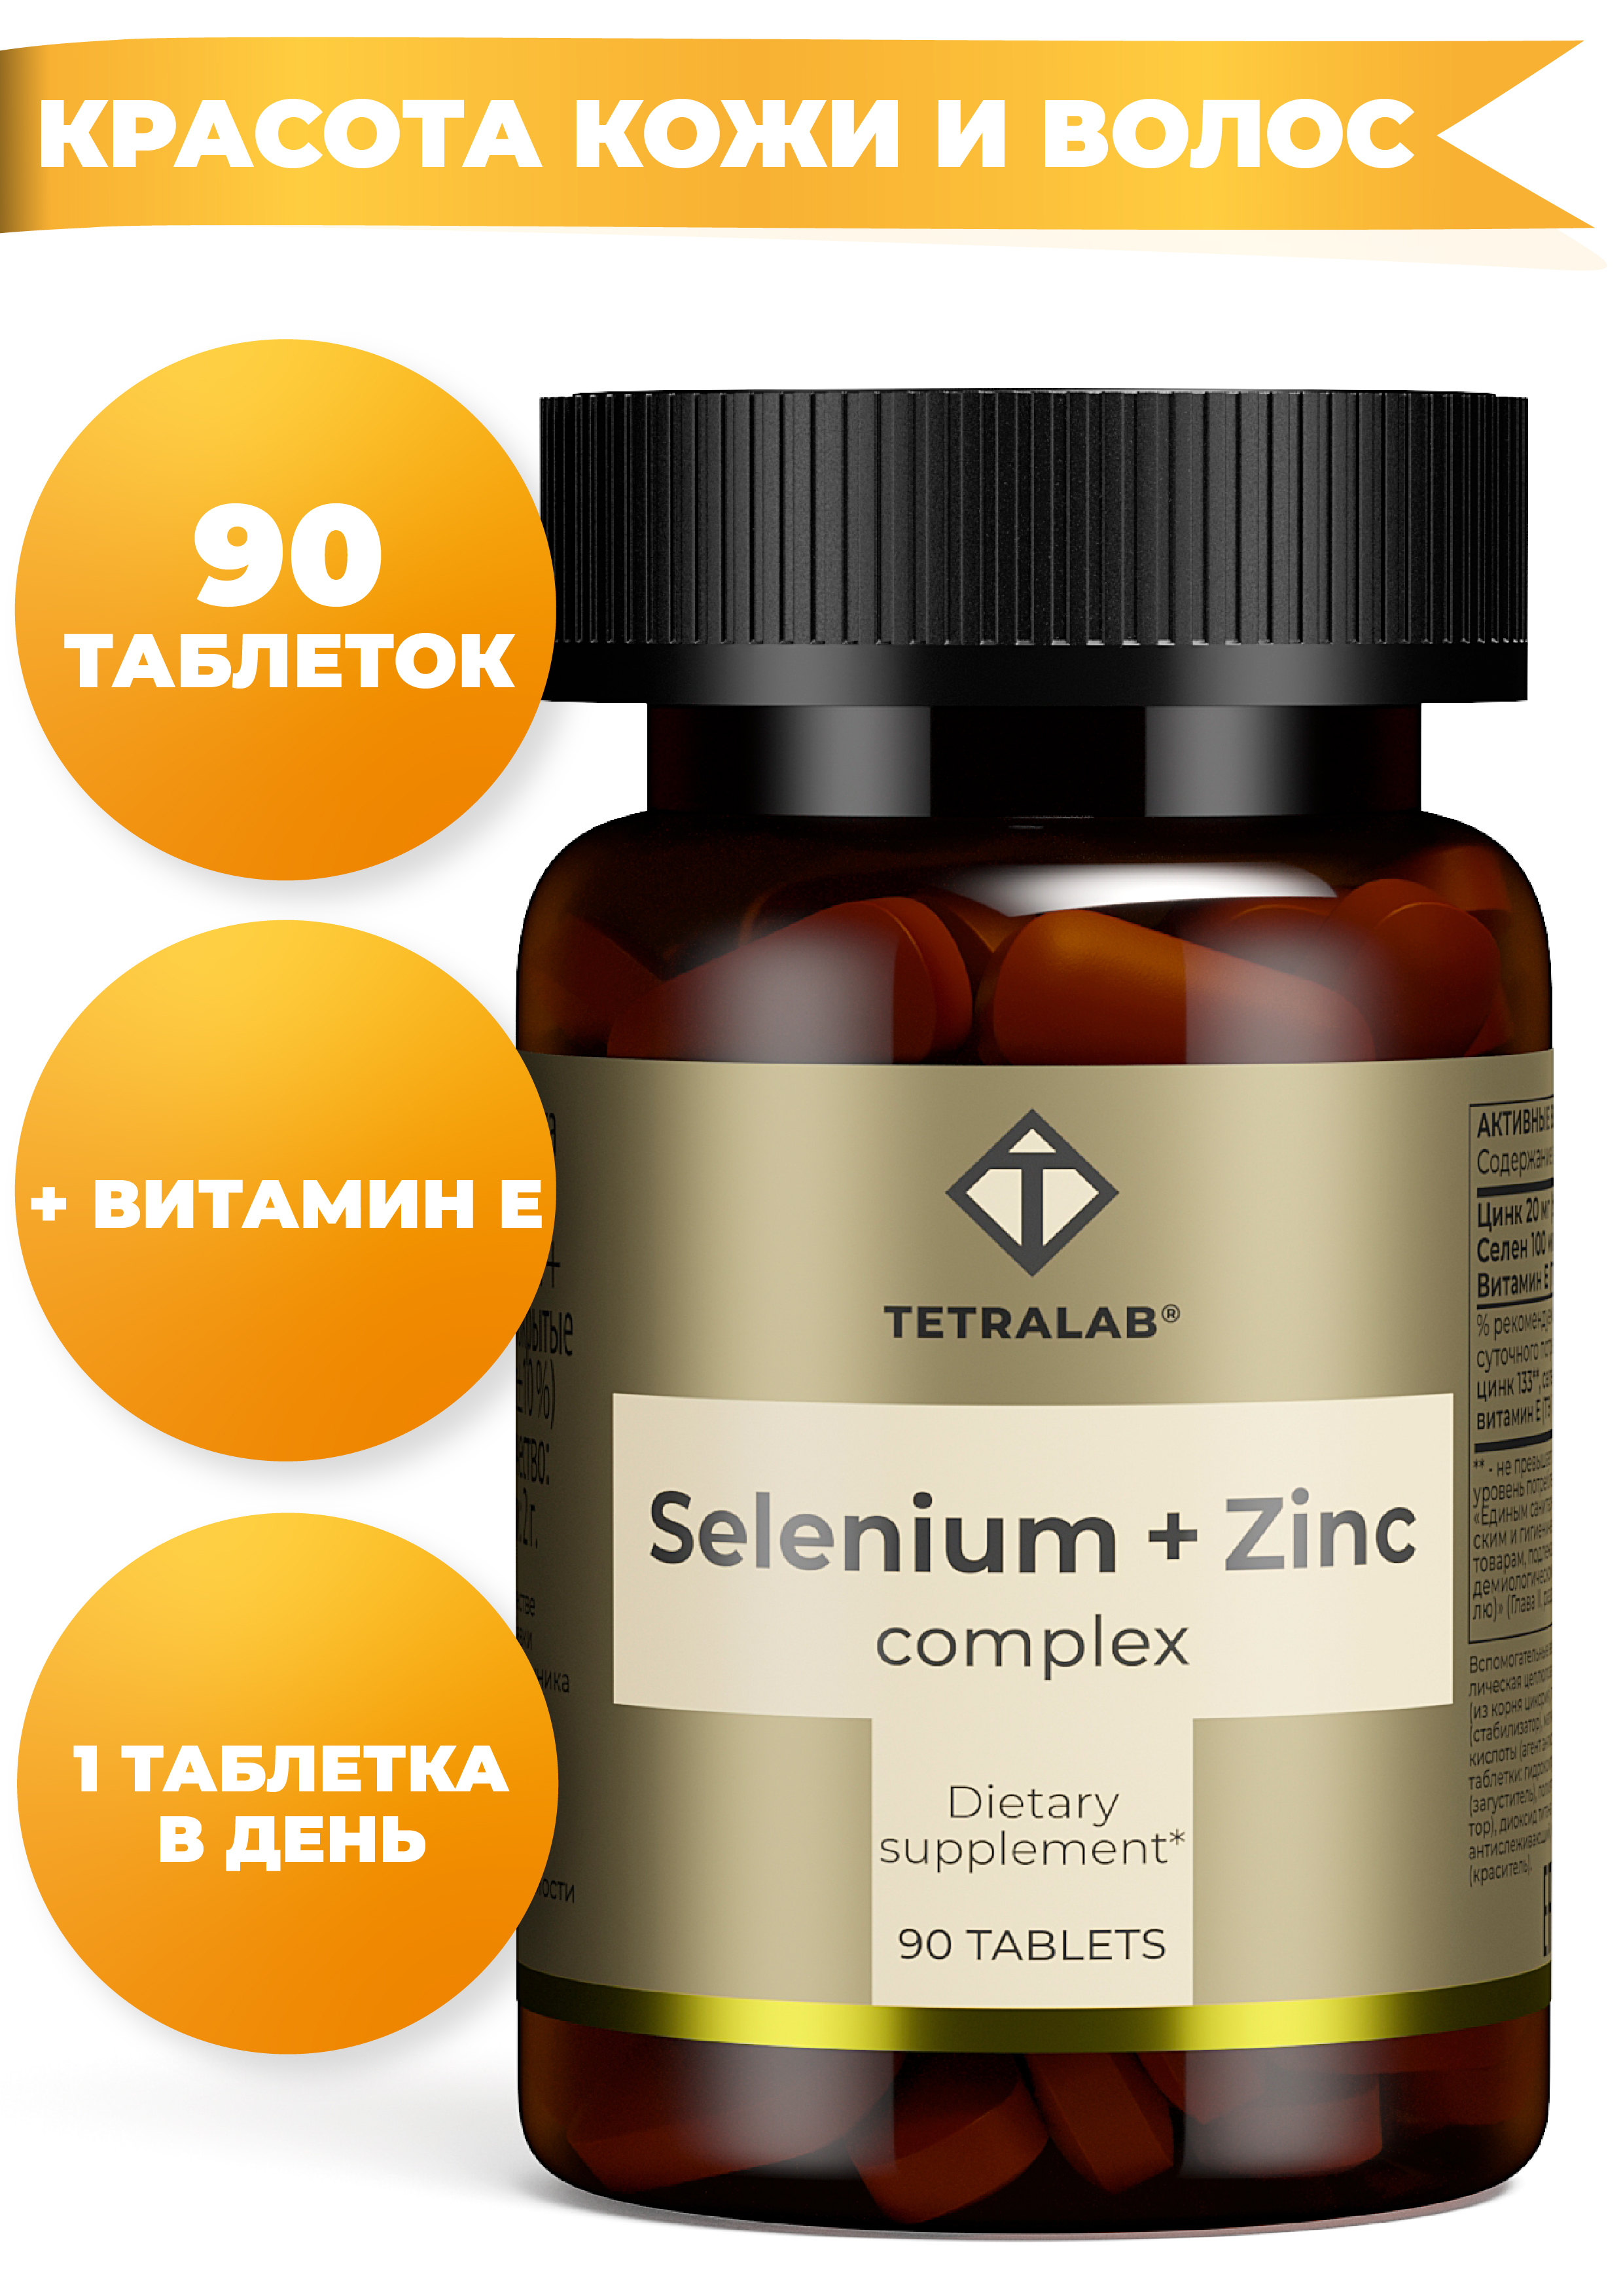 Zinc selenium. Витамины с цинком и селеном. ТЕТРАЛАБ селен цинк. ТЕТРАЛАБ селен + цинк комплекс. Селен - мощный антиоксидант.